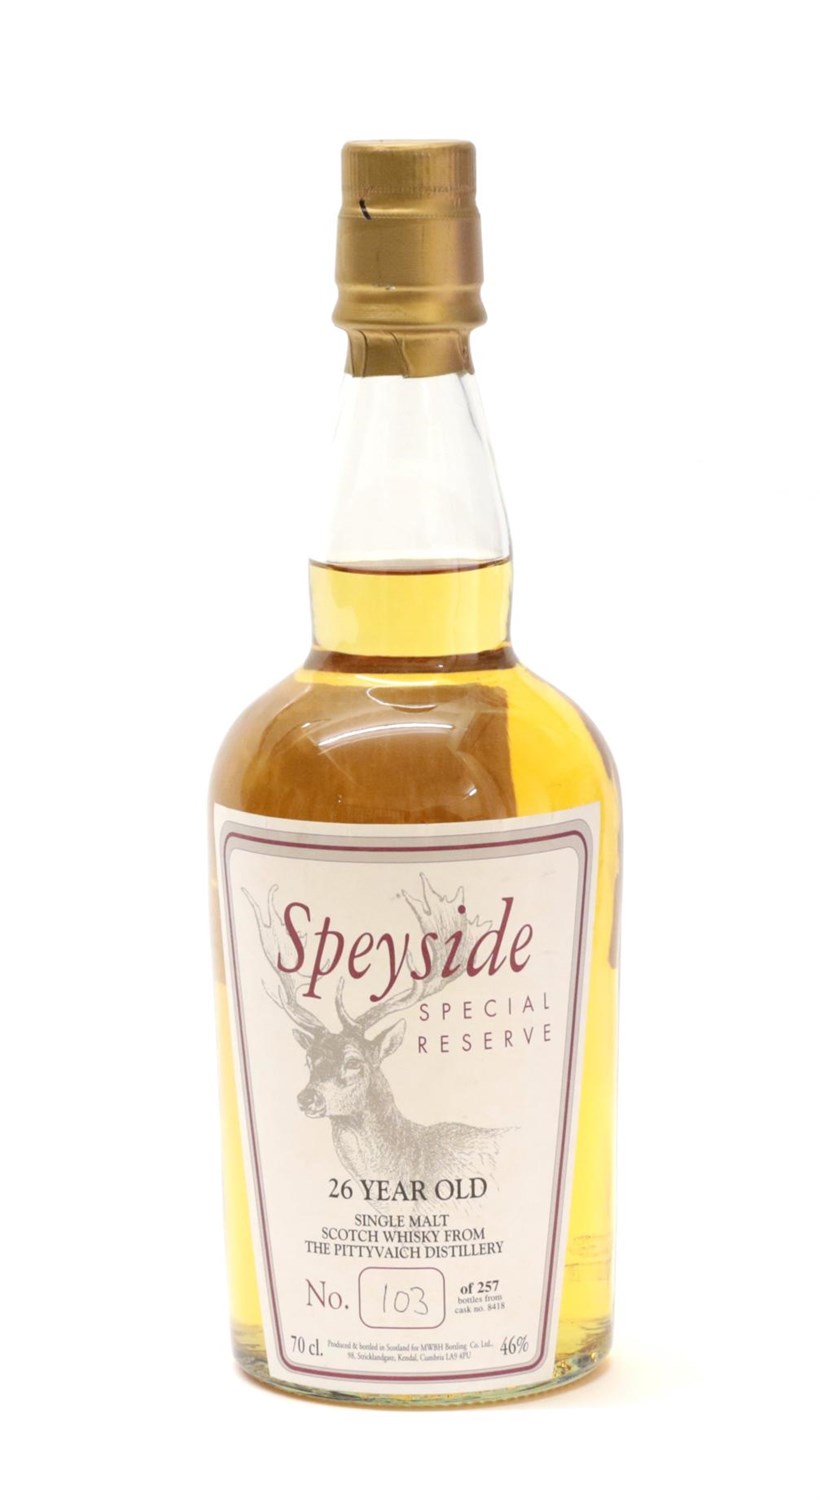 Lot 2192 - Speyside Special Reserve 26 Year Old Single Malt Whisky, bottle number 103 of 257, 46%, 70cl